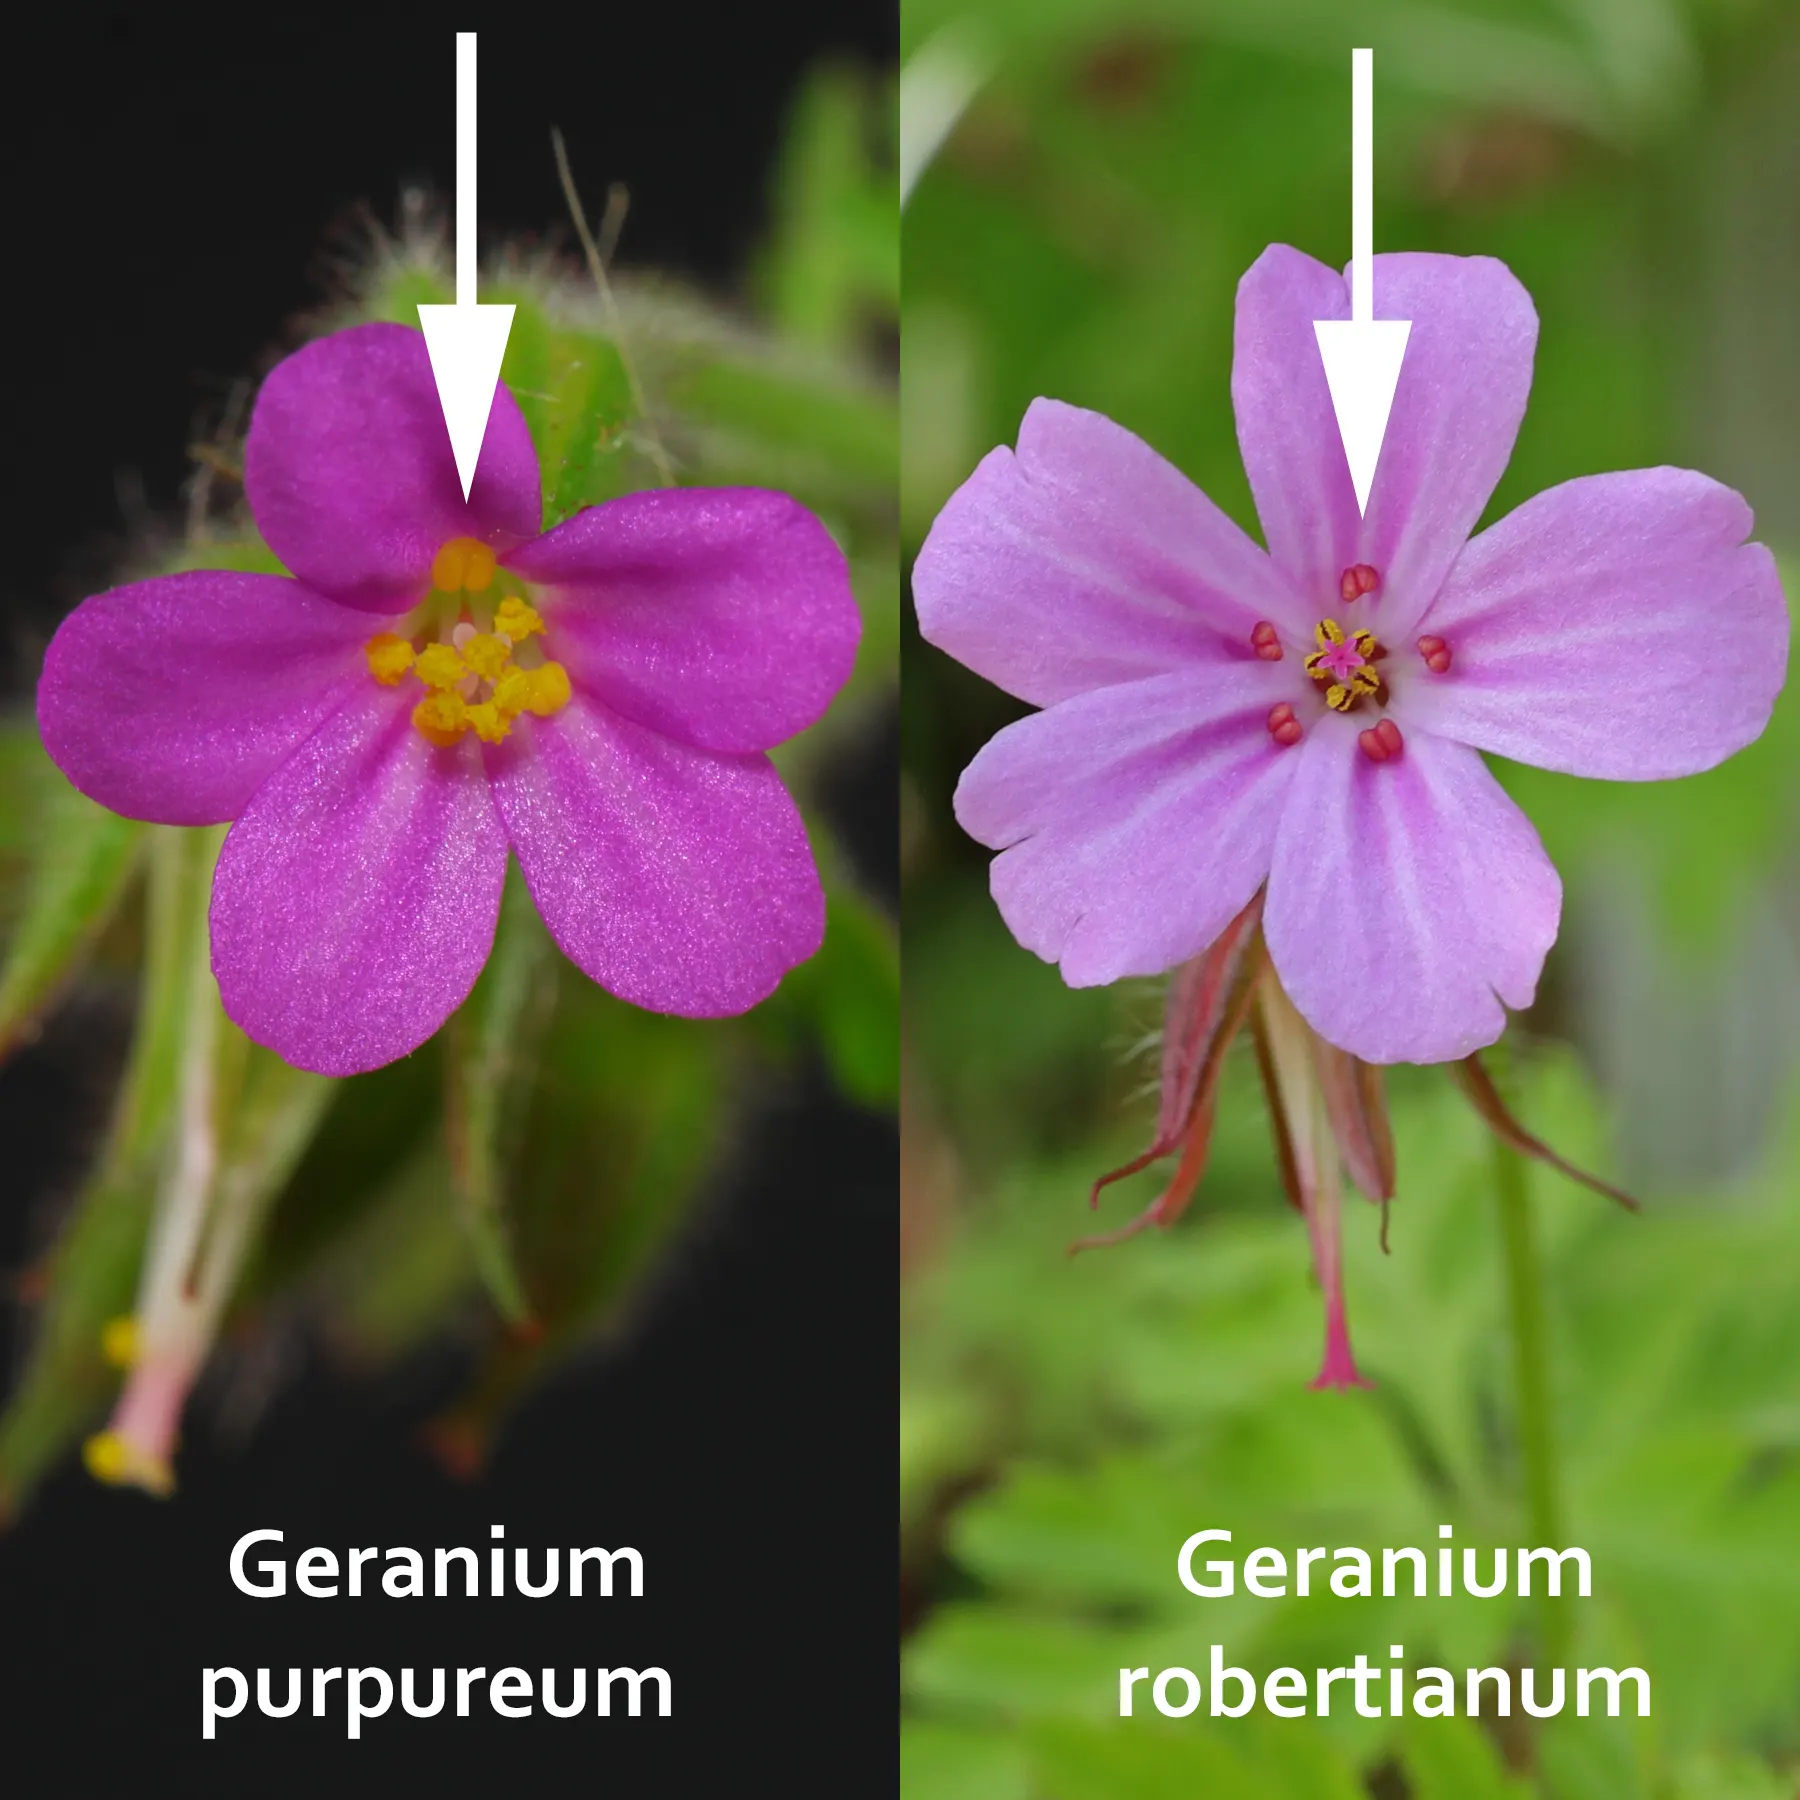 Geranium purpureum und Geranium robertianum unterscheiden